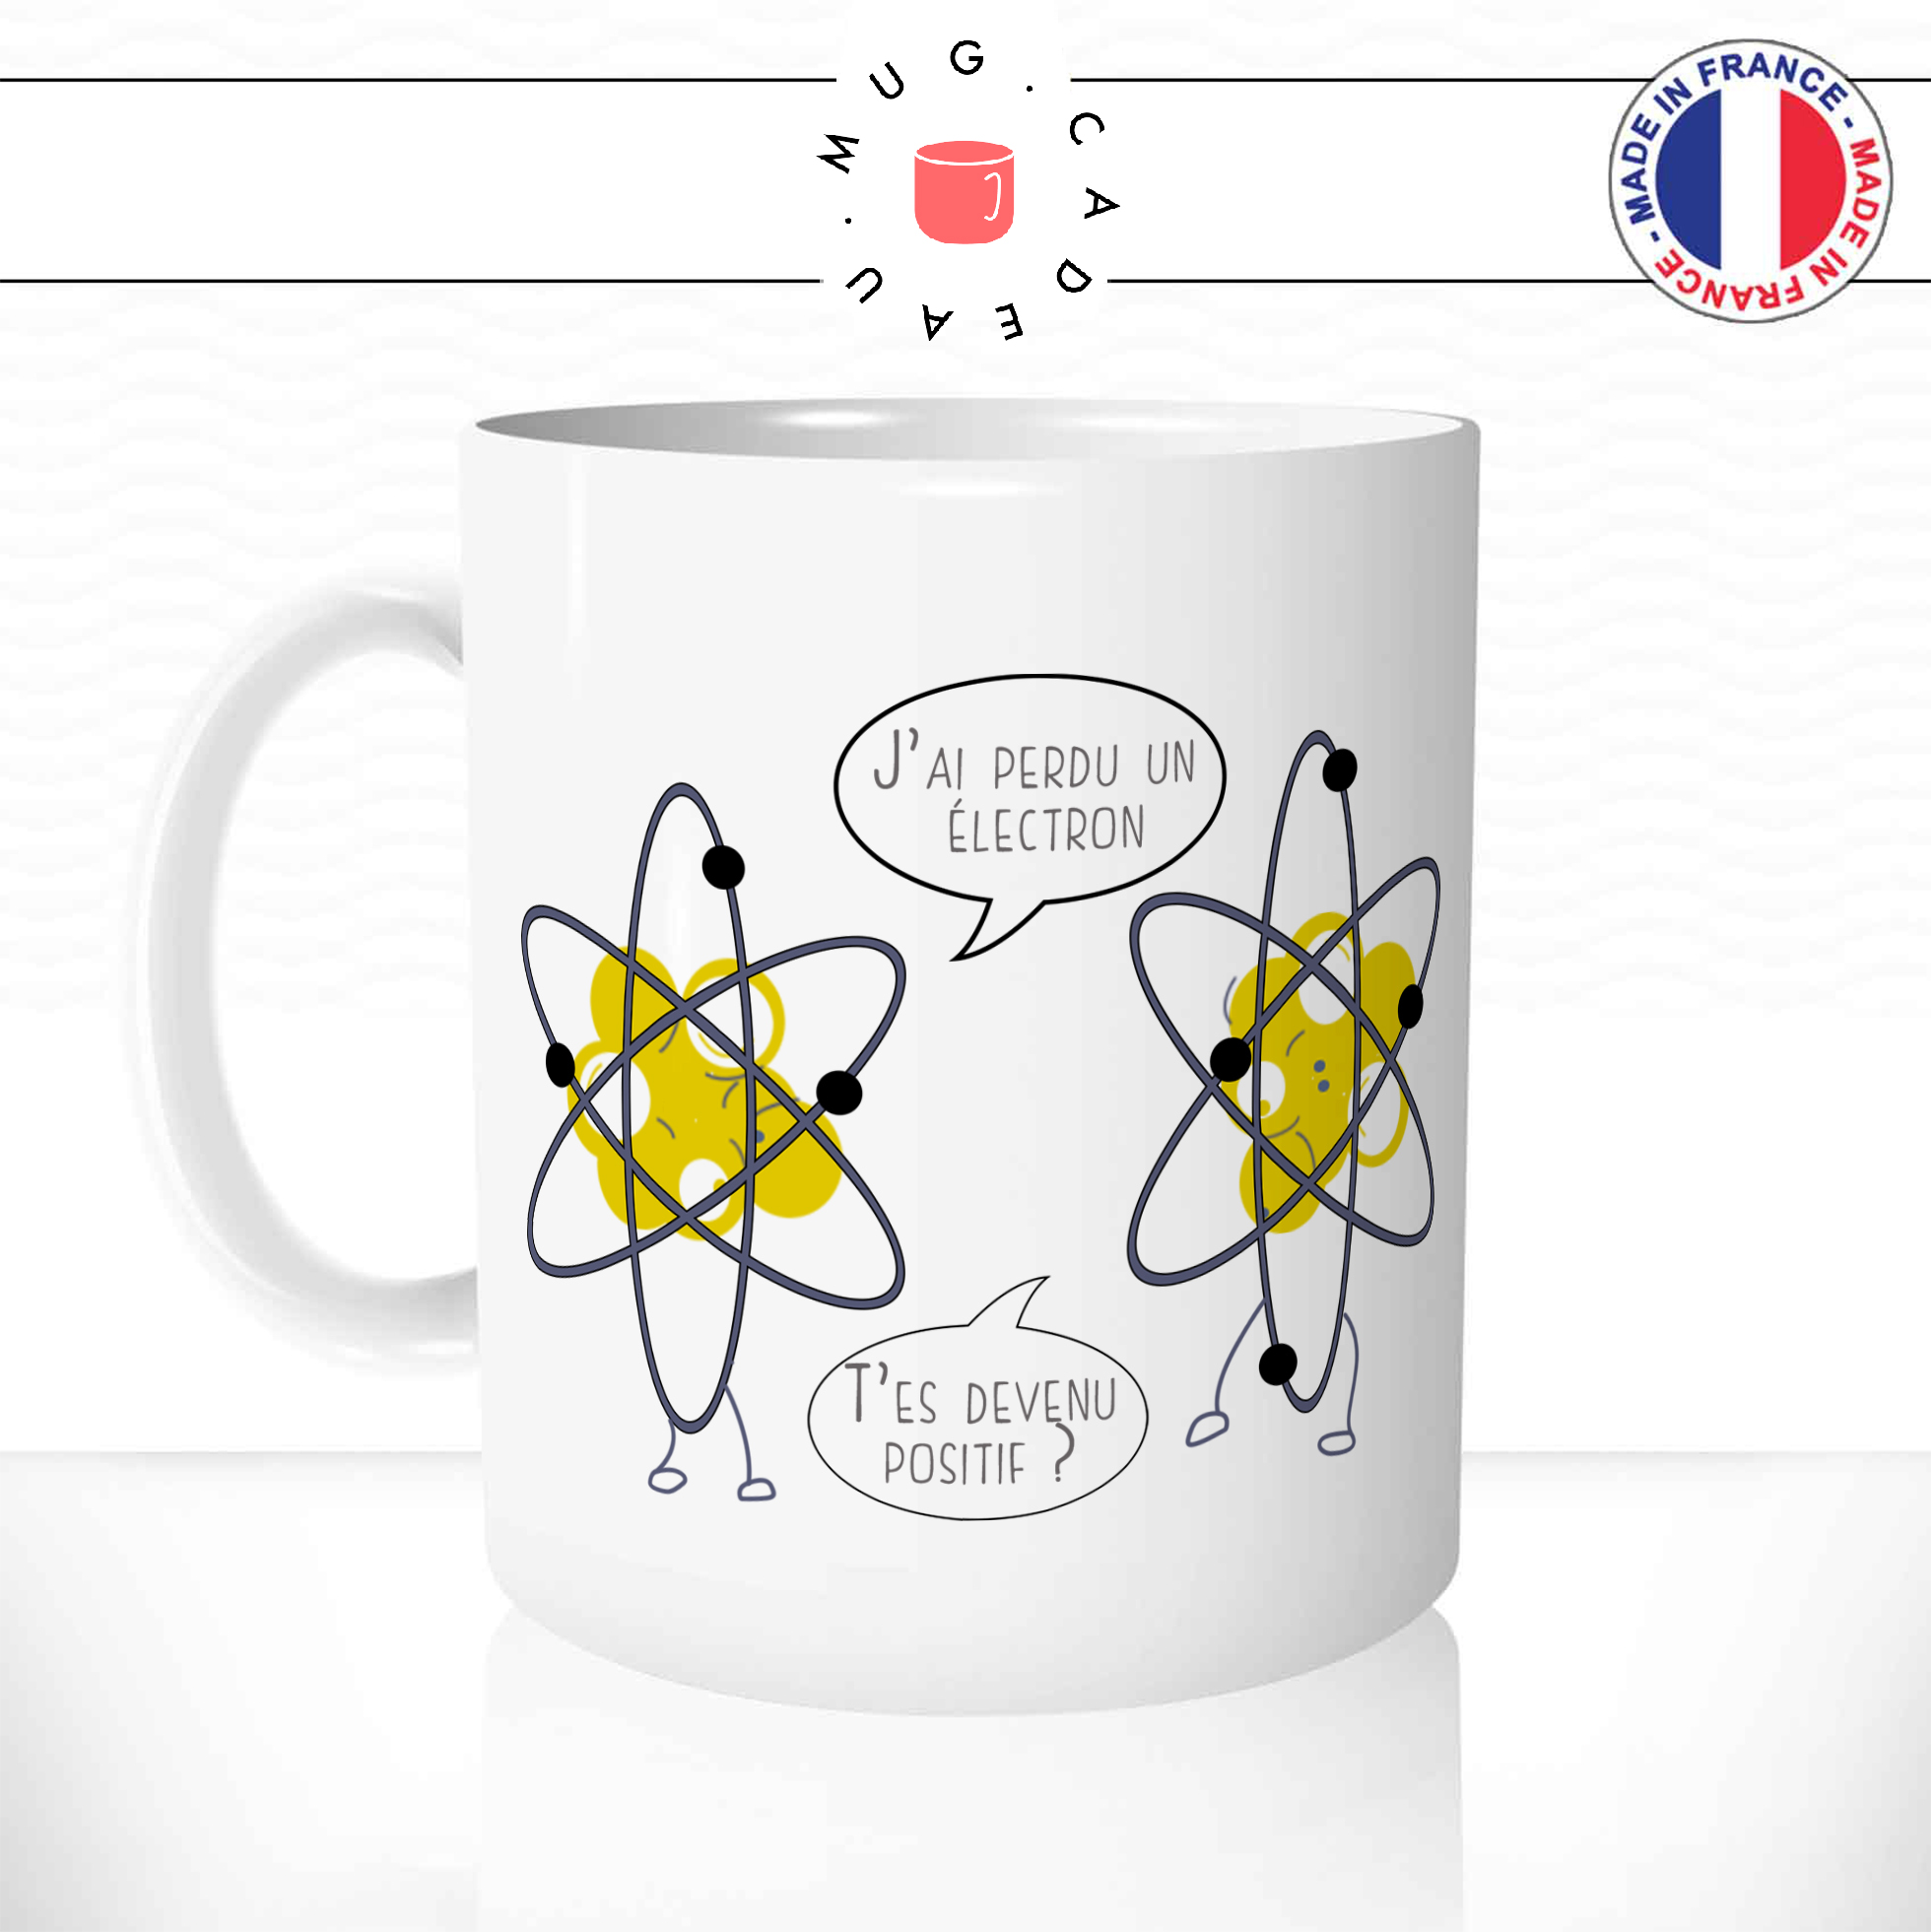 mug-tasse-ref12-geek-electrons-positif-humour-cafe-the-mugs-tasses-personnalise-anse-gauche